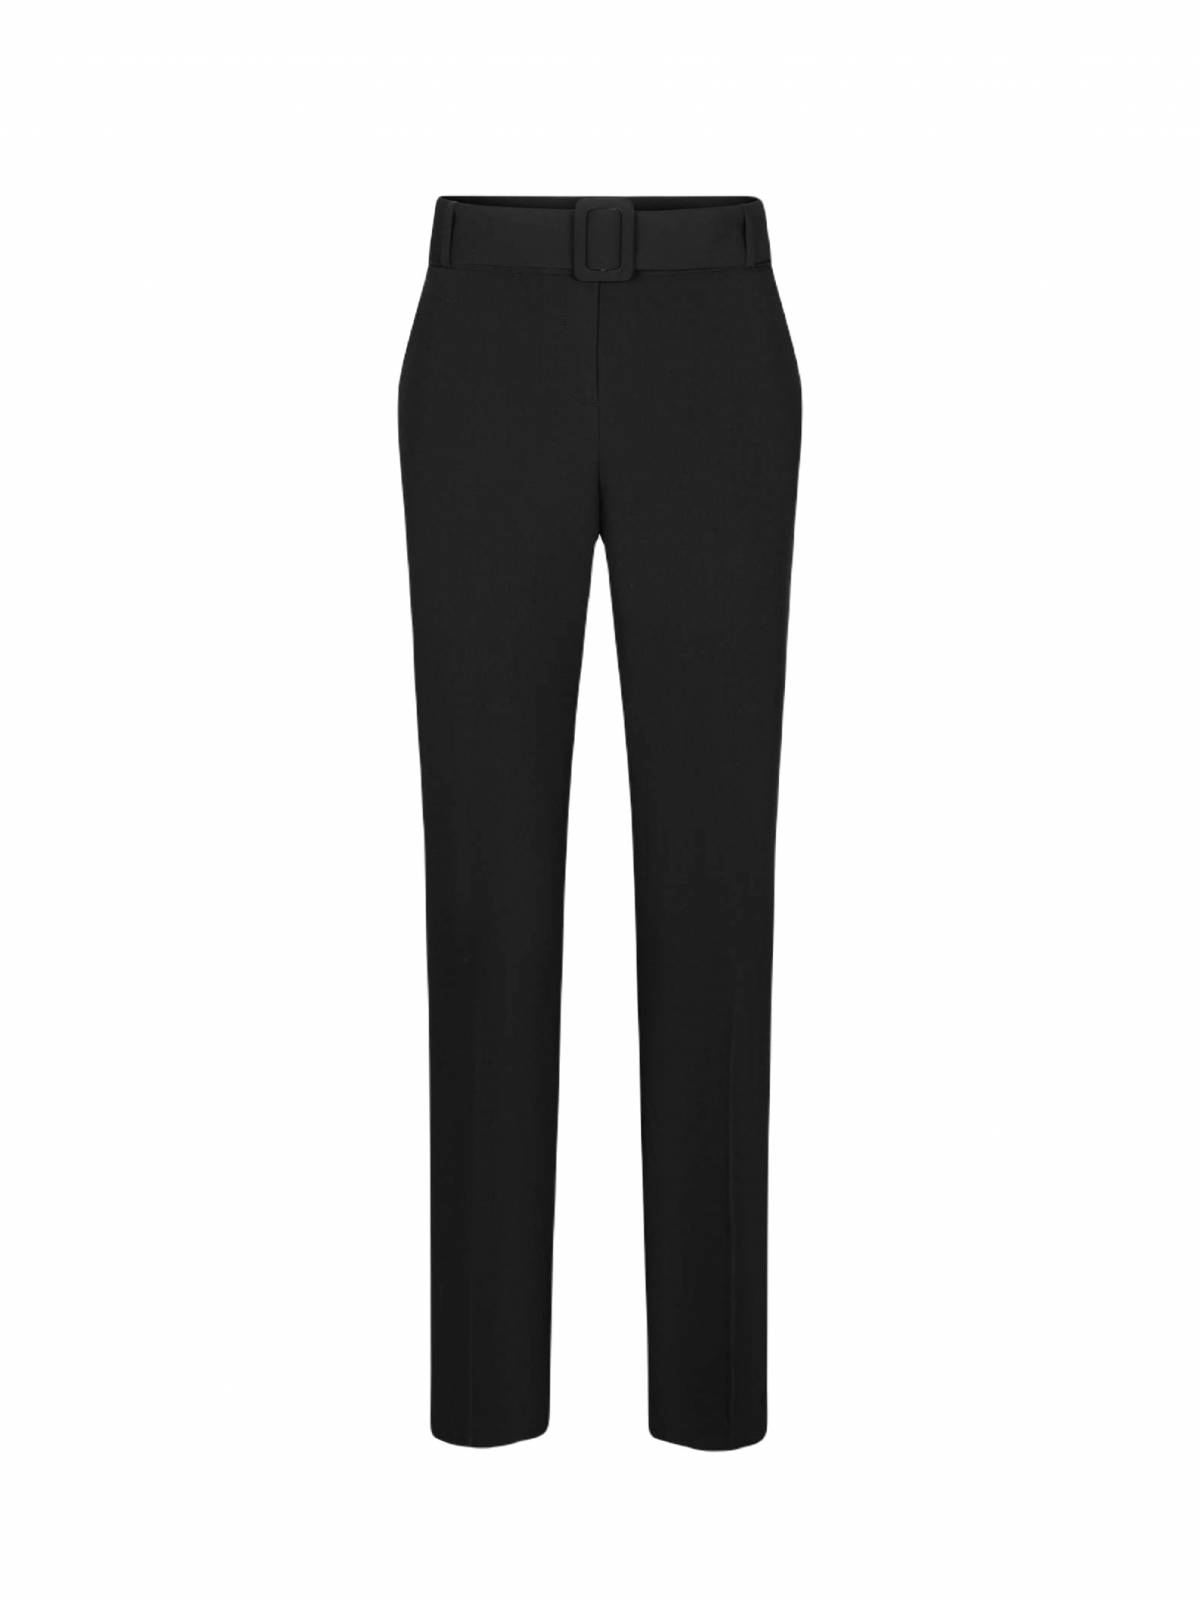 Pantaloni Orsay Negru din Poliester EU 40